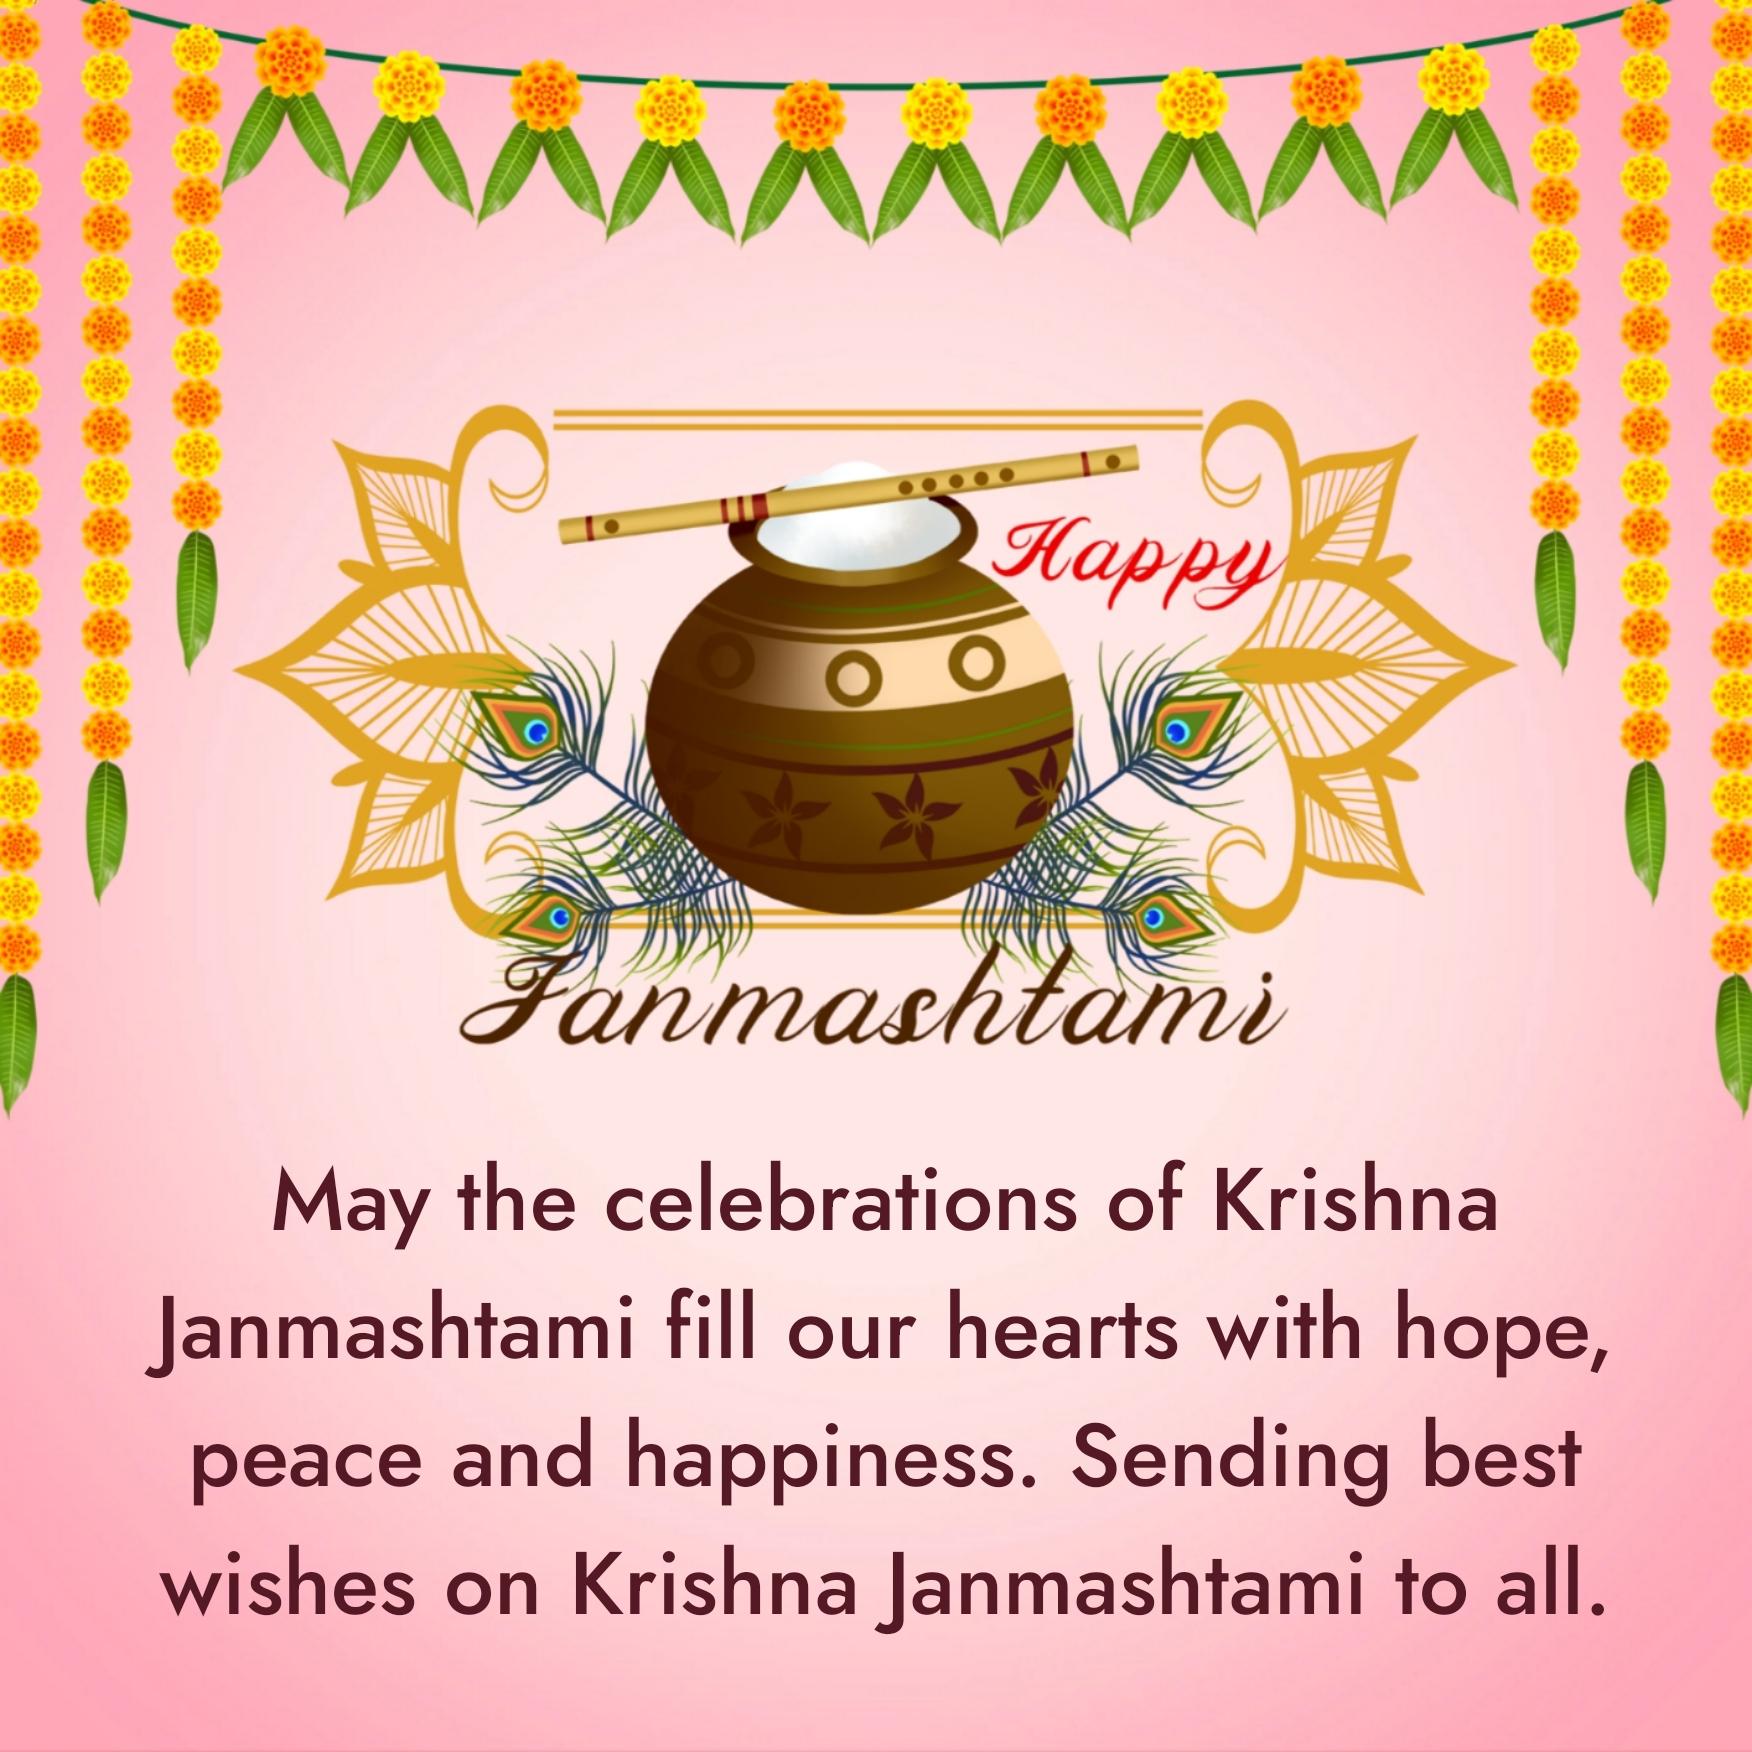 May the celebrations of Krishna Janmashtami fill our hearts